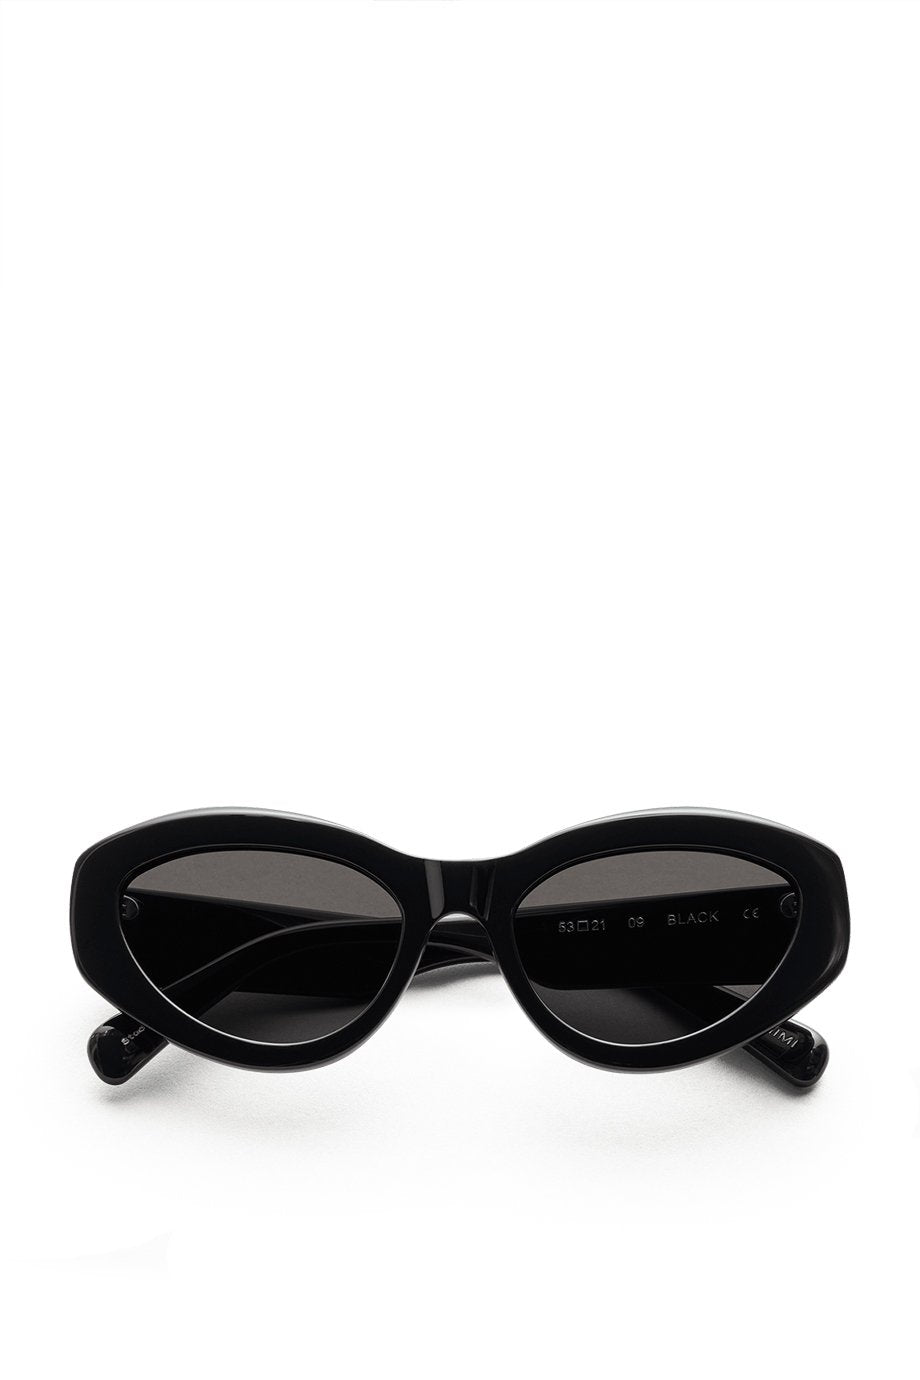 Chimi 09 Sunglasses - Black